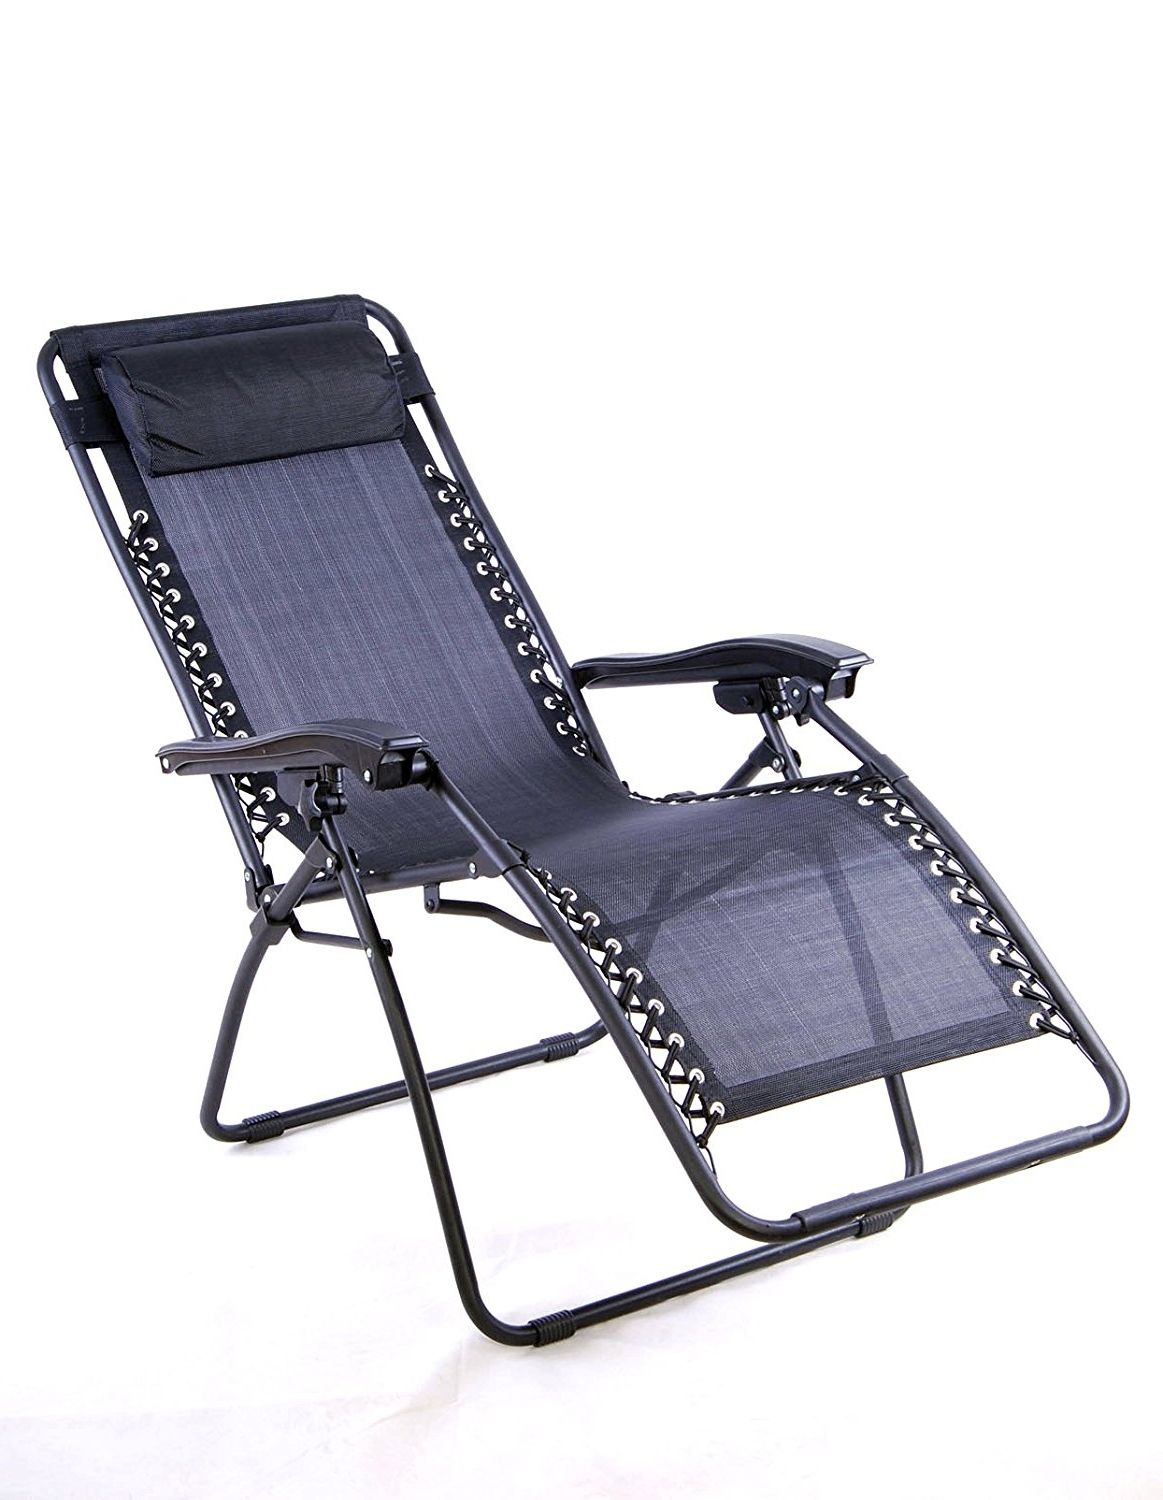 Amazon : Anti Gravity Chair, Zero Gravity Chair, Super Regarding Most Popular Zero Gravity Chaise Lounge Chairs (View 6 of 15)